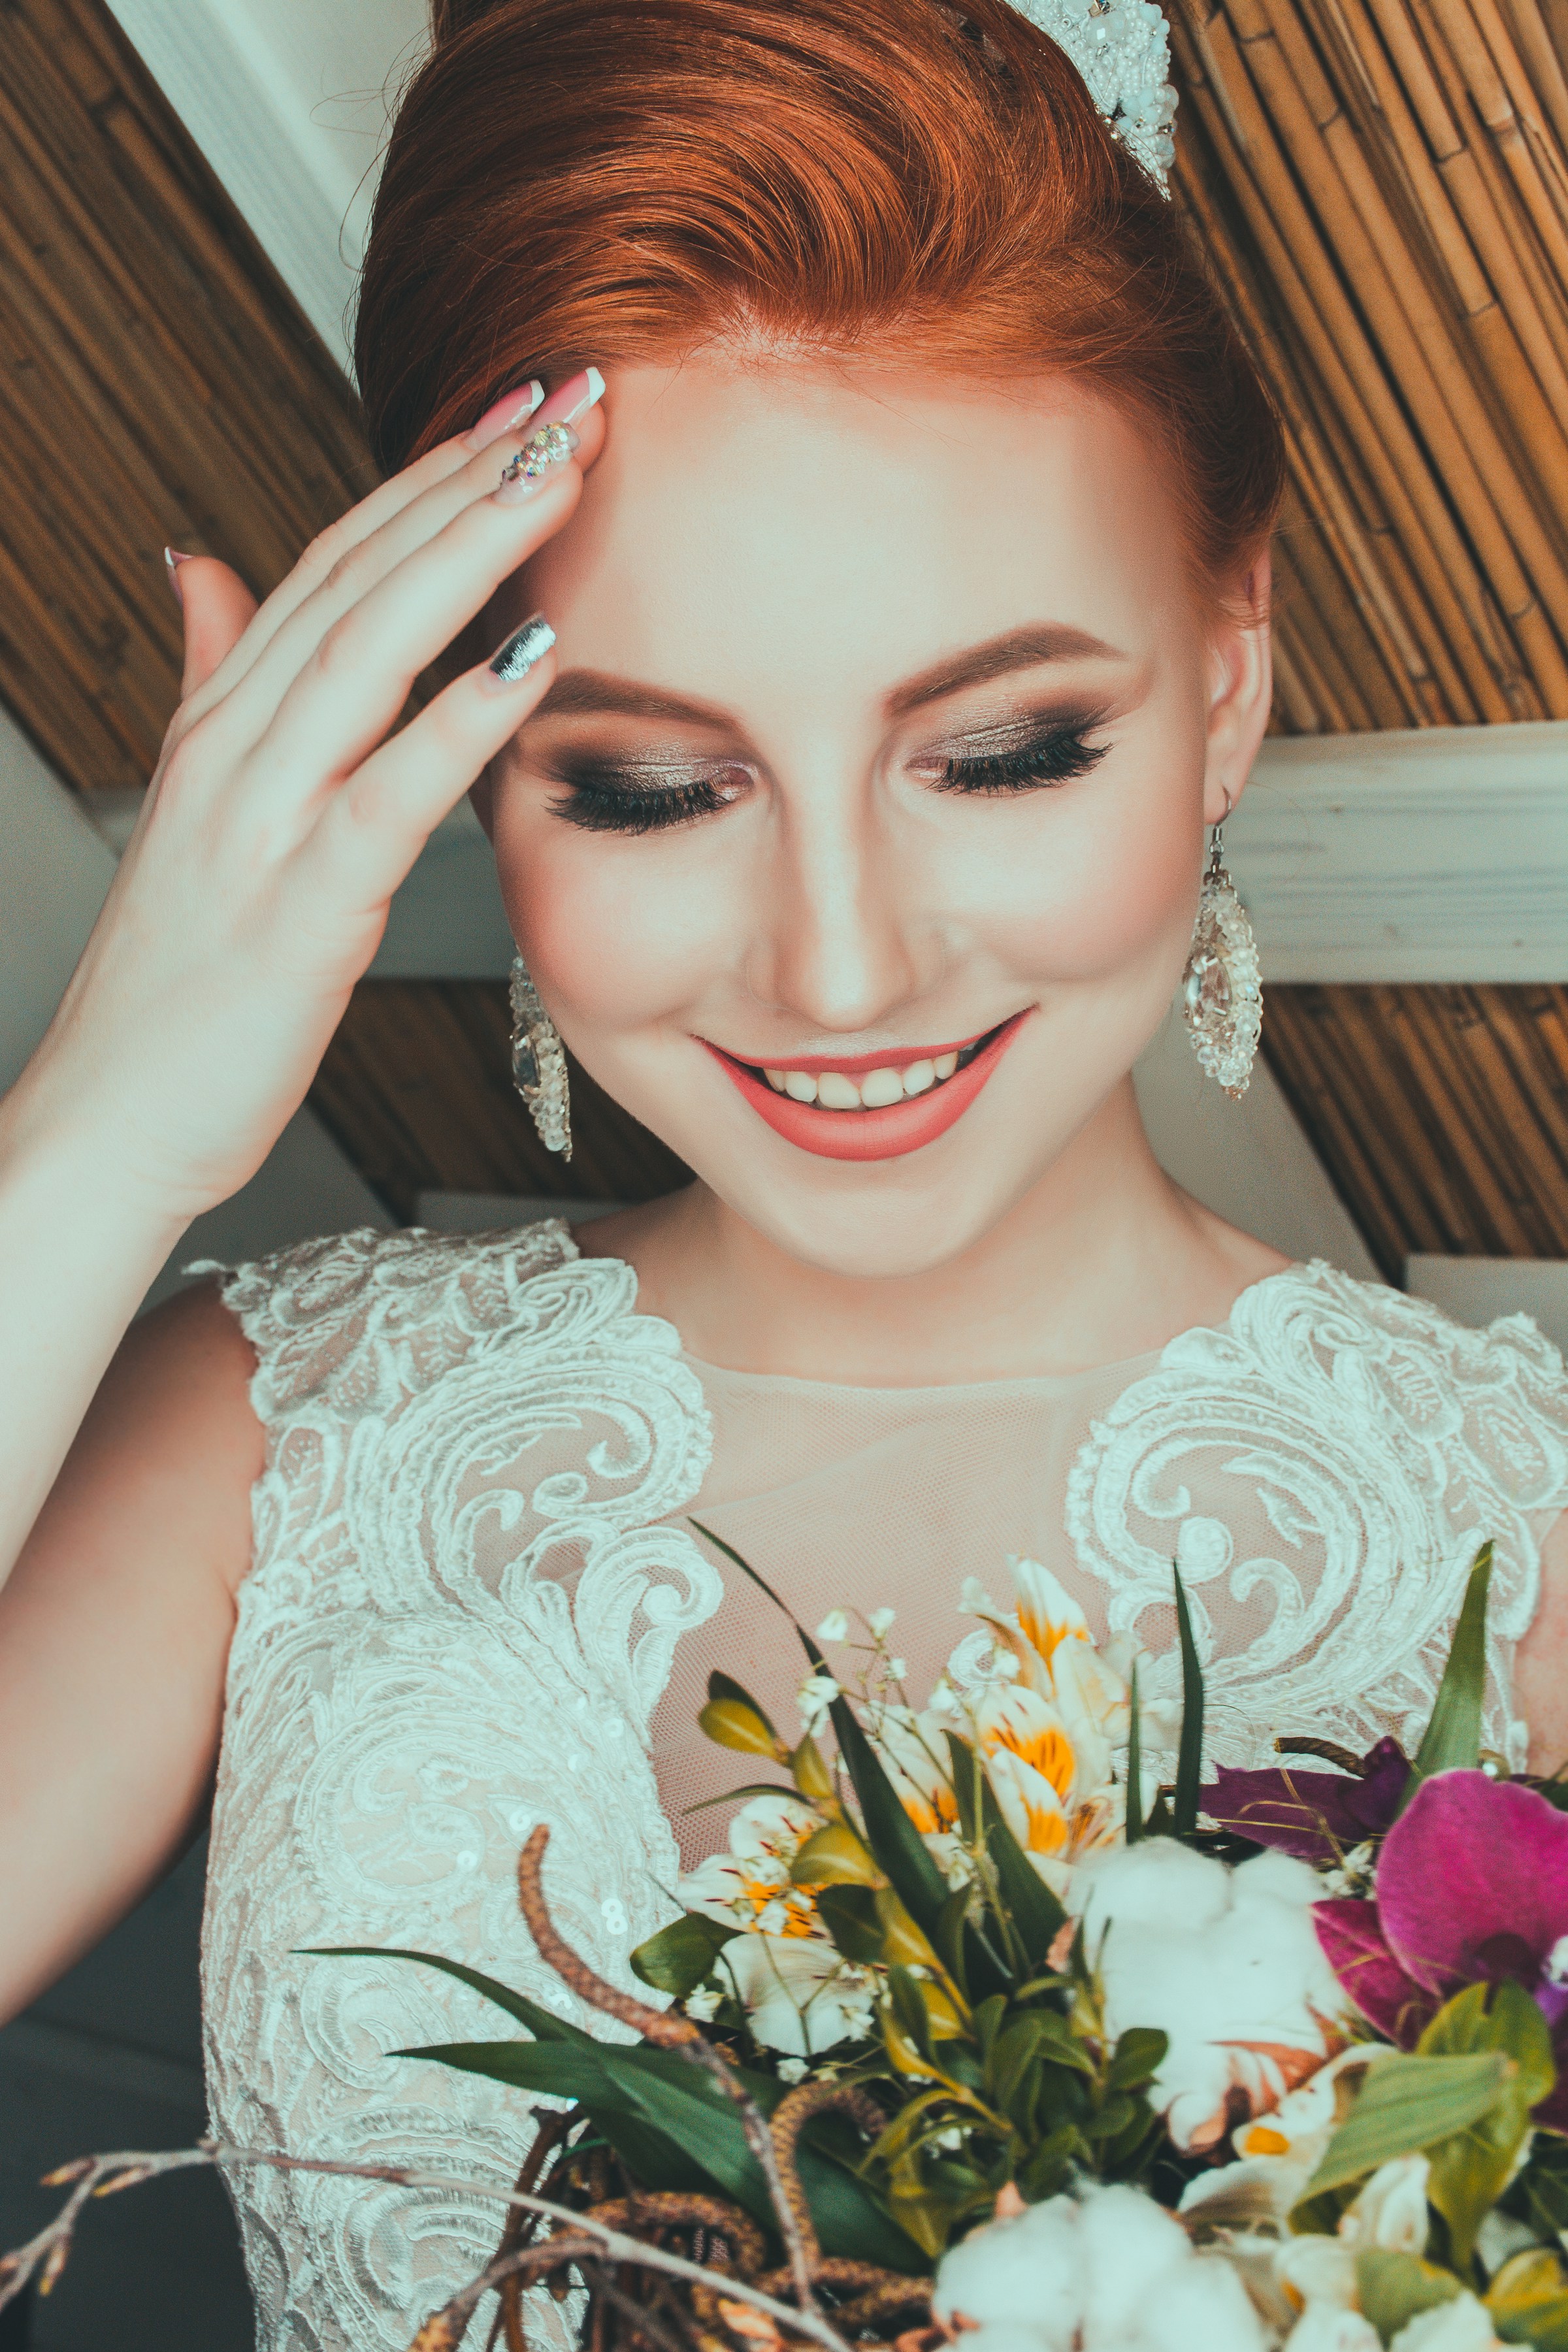 A bride smiling | Source: Unsplash